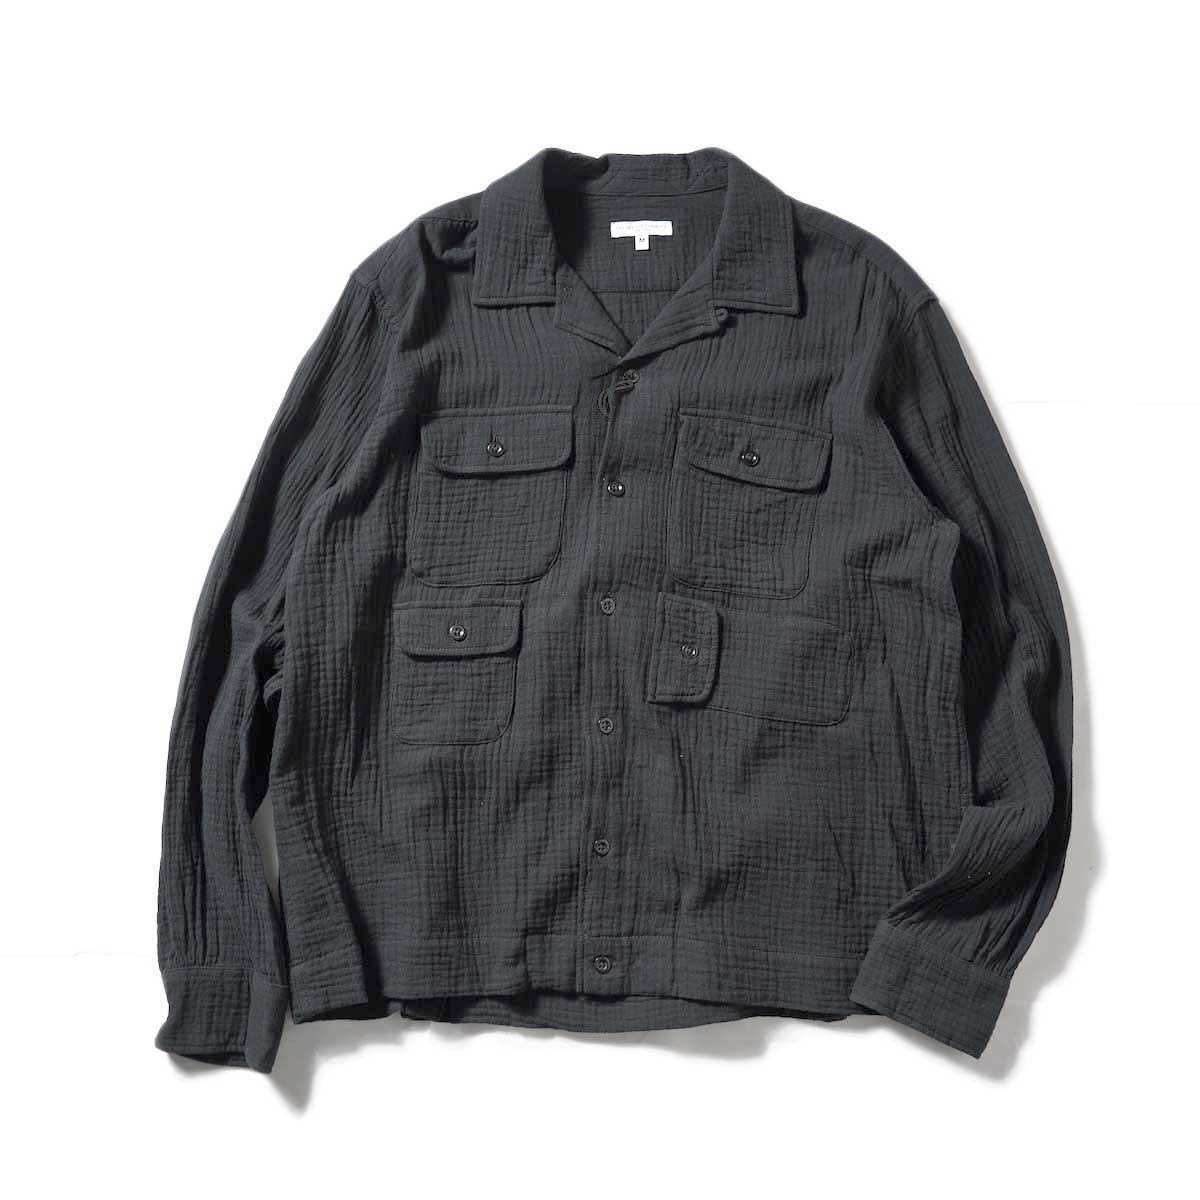 Engineered Garments / Bowling Shirt - Cotton Crepe (Black)